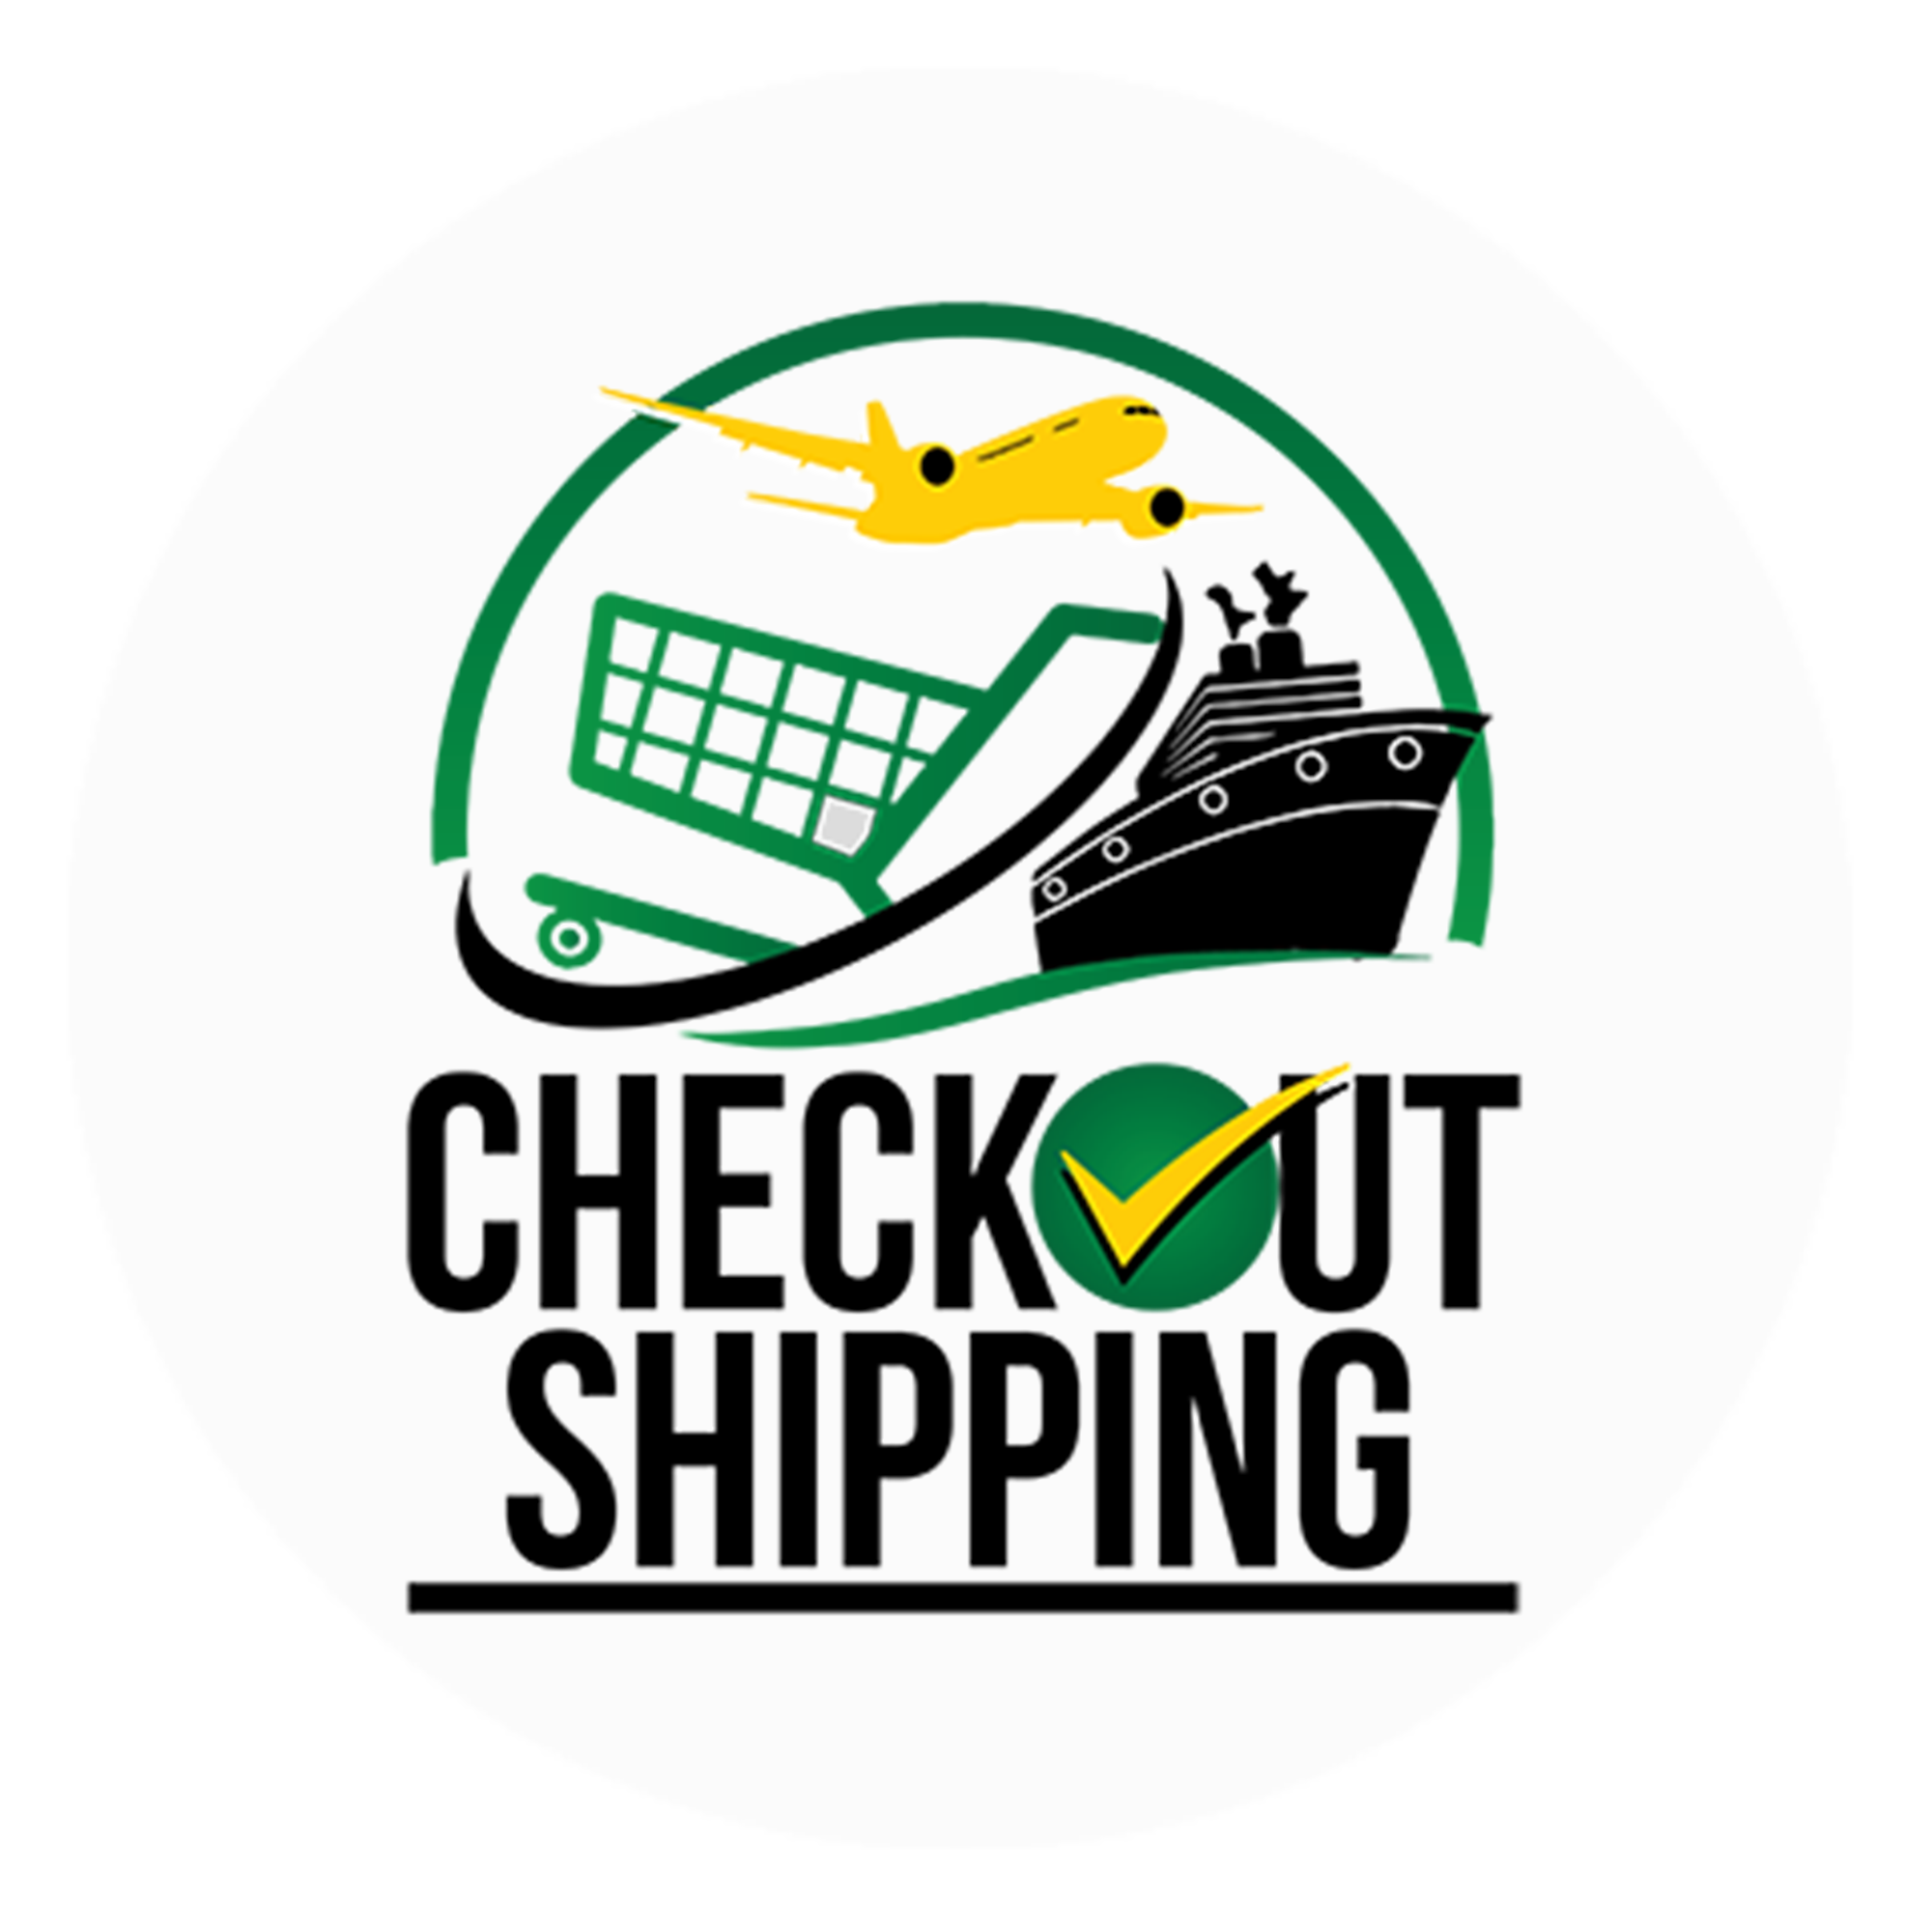 Checkout Shipping